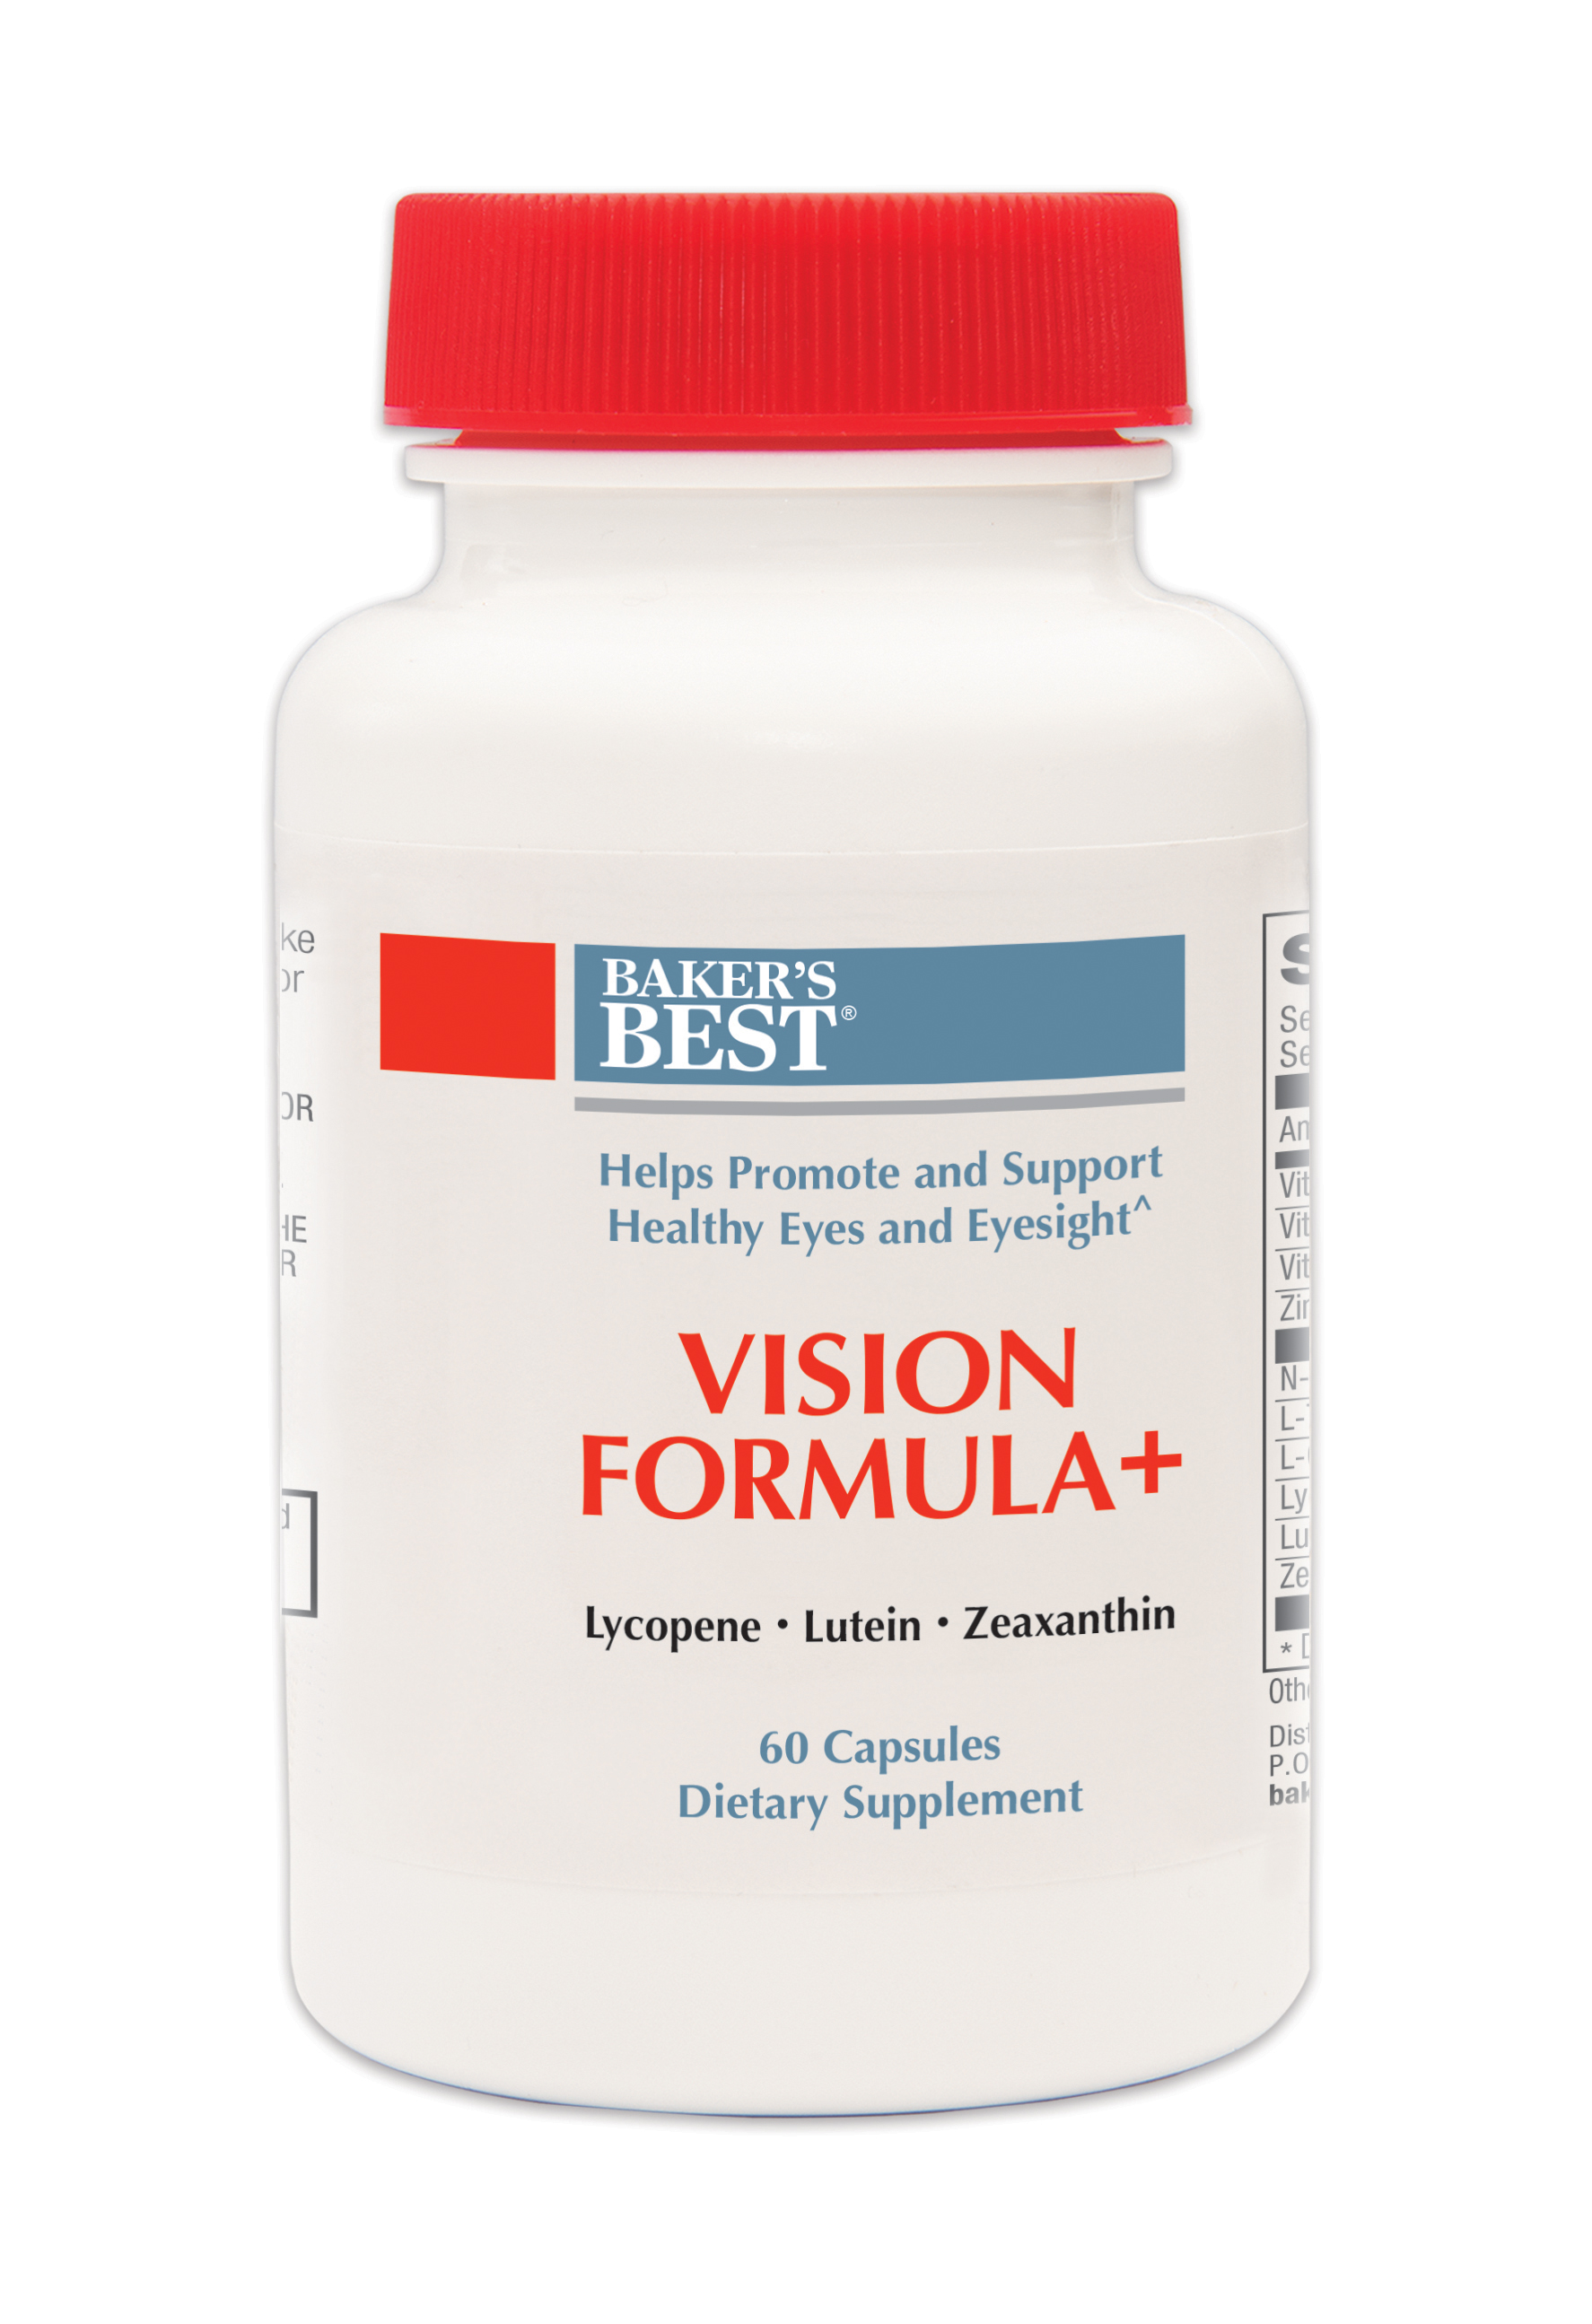 Vision Formula+